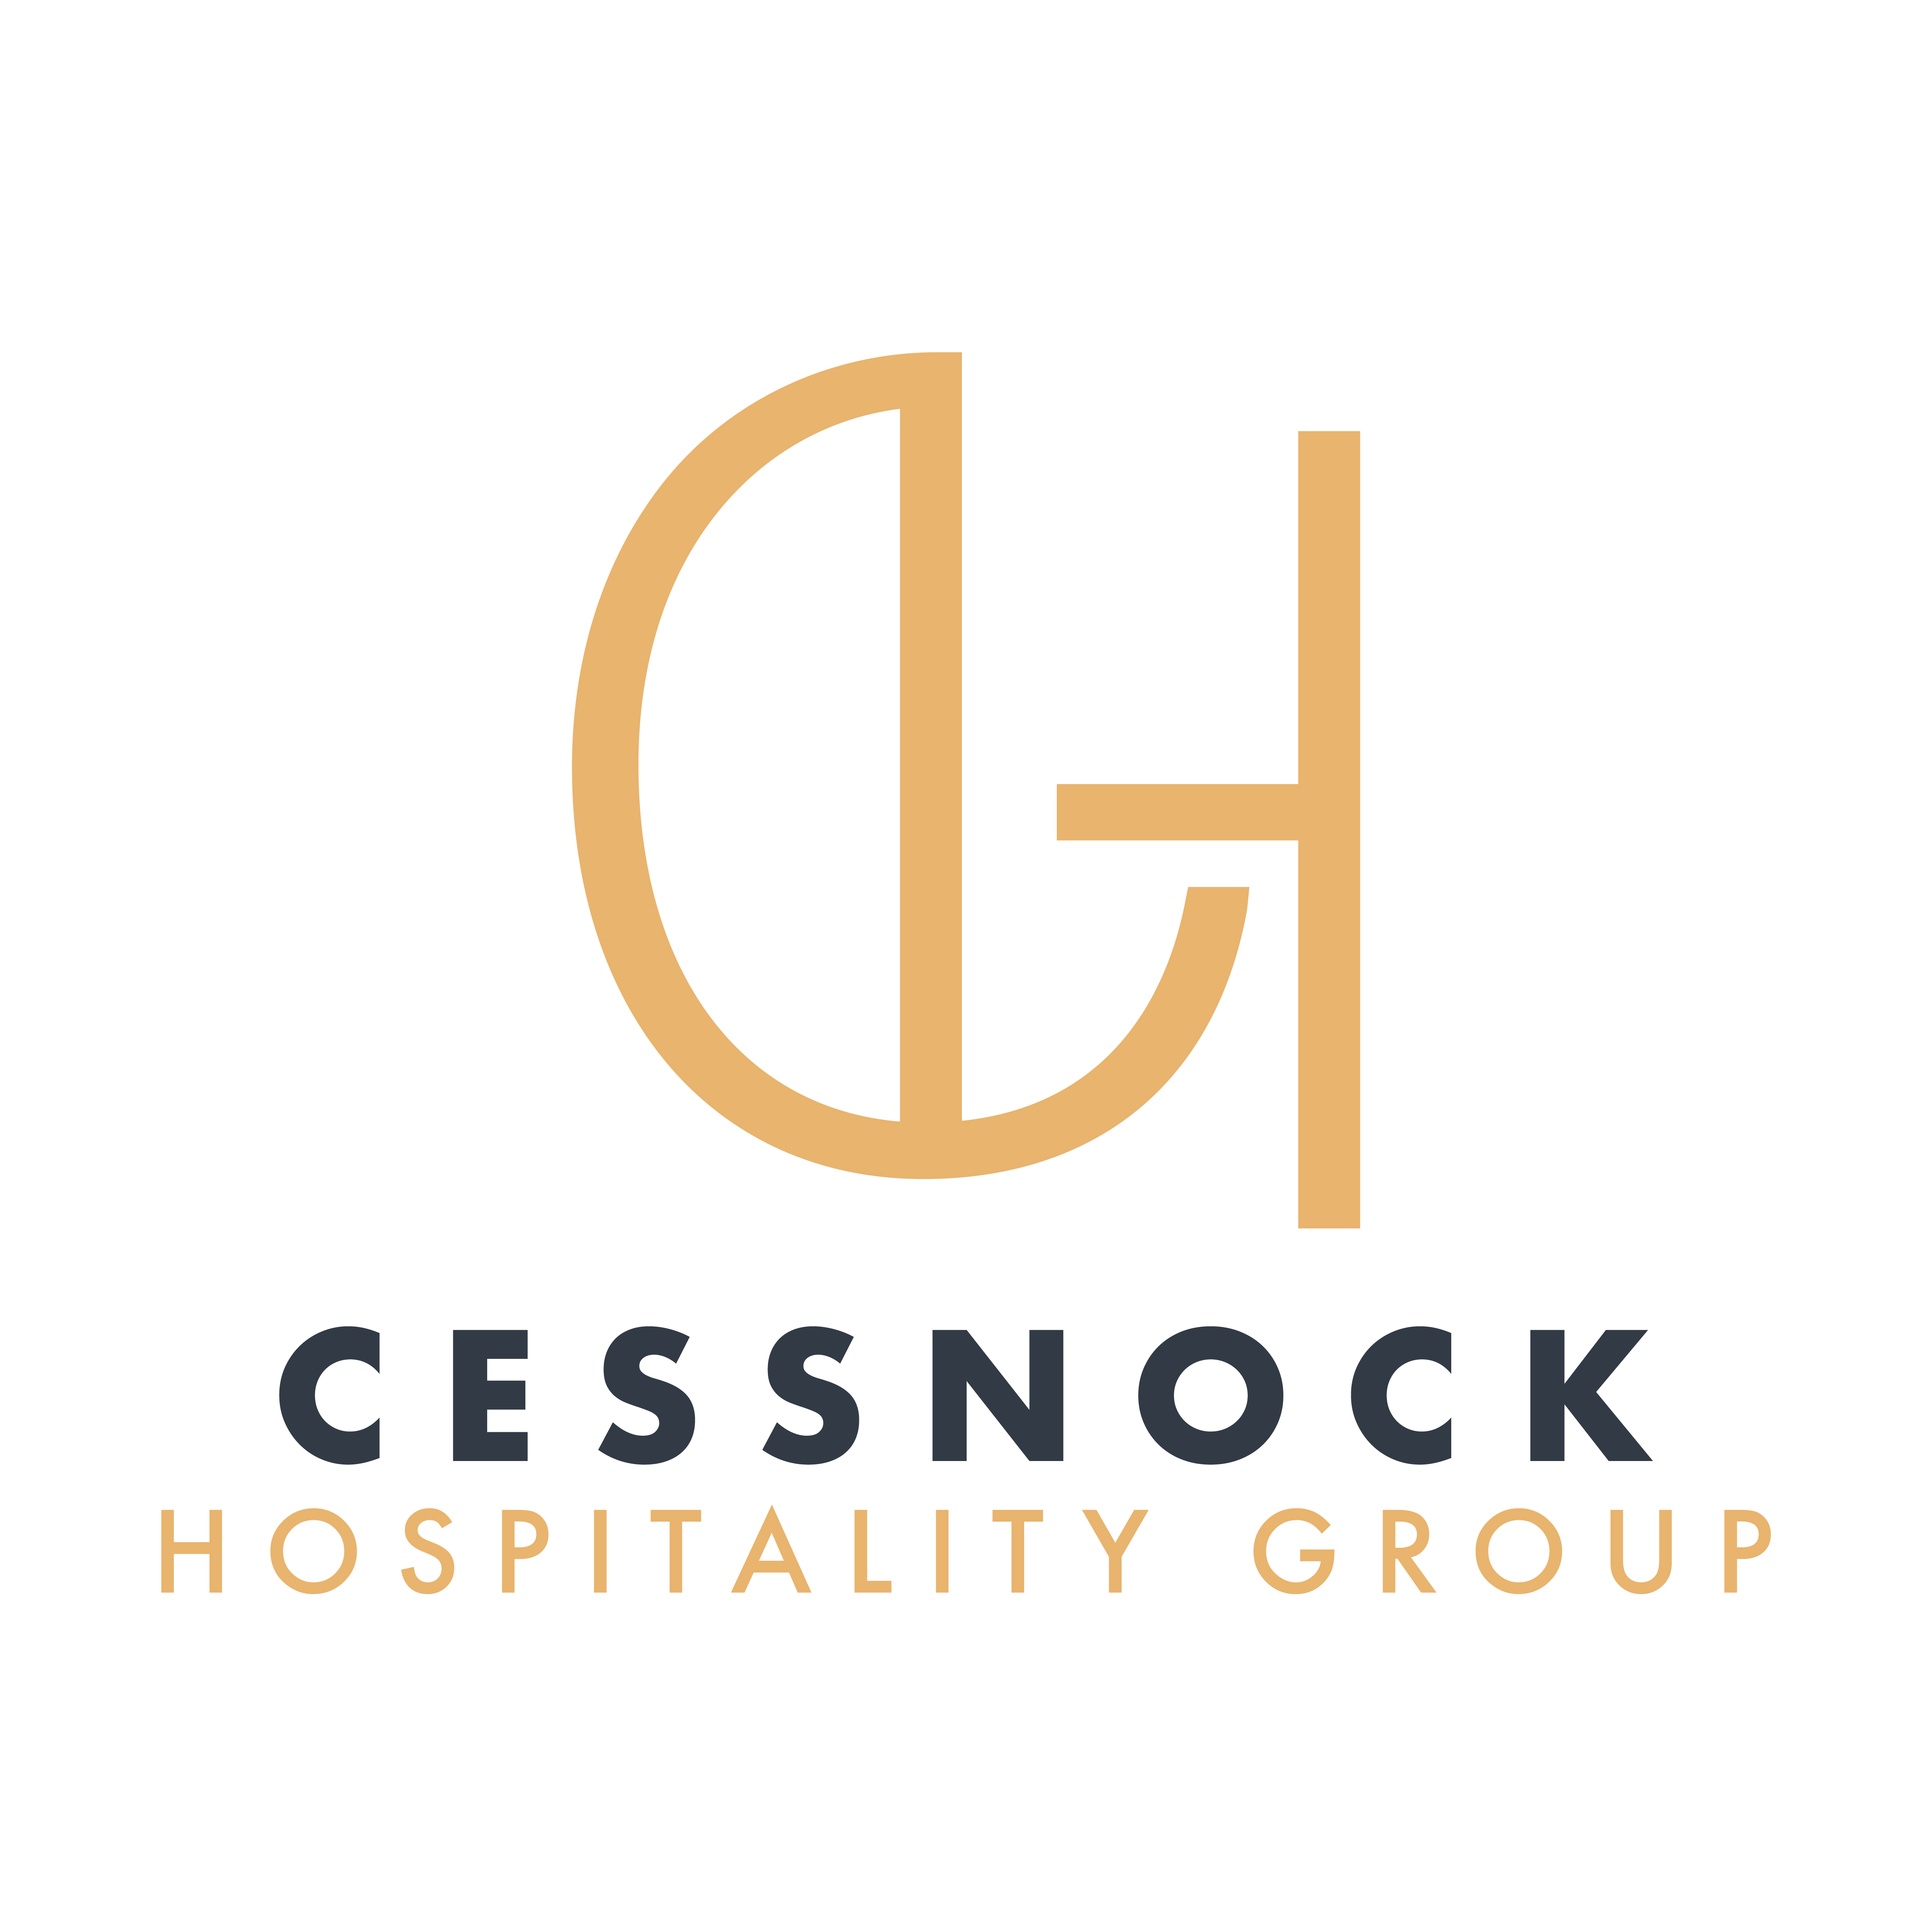 Cessnock Hospitality Group Logo